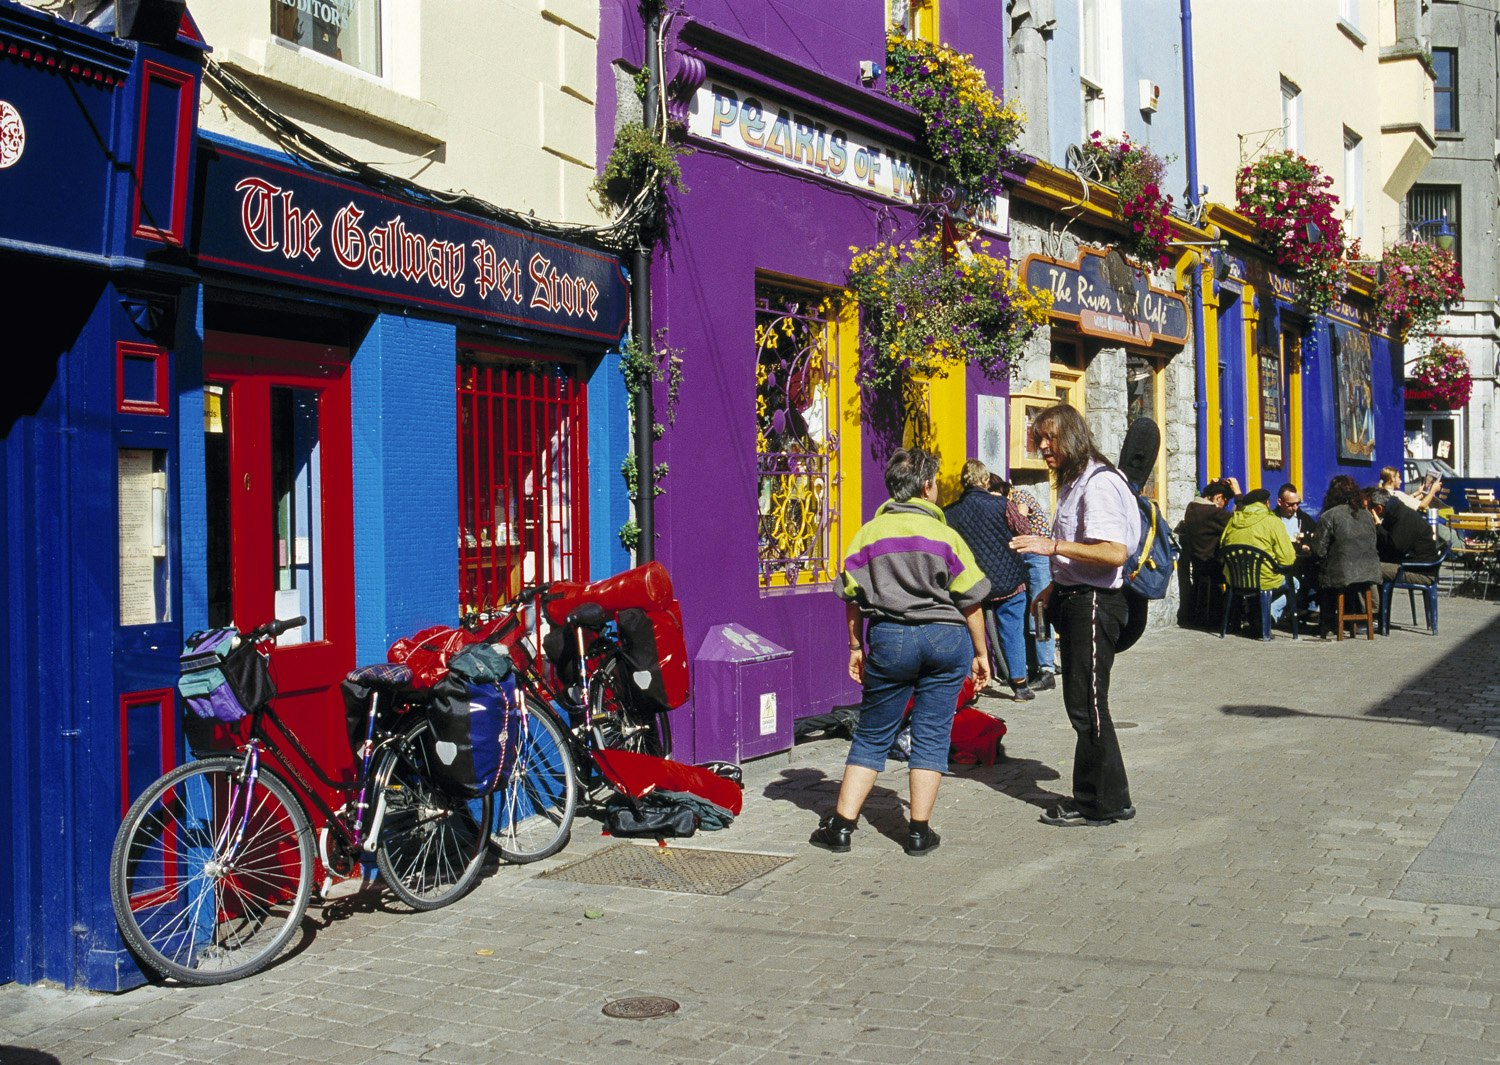 A street in Galway, Ireland. Image: Failte Ireland 